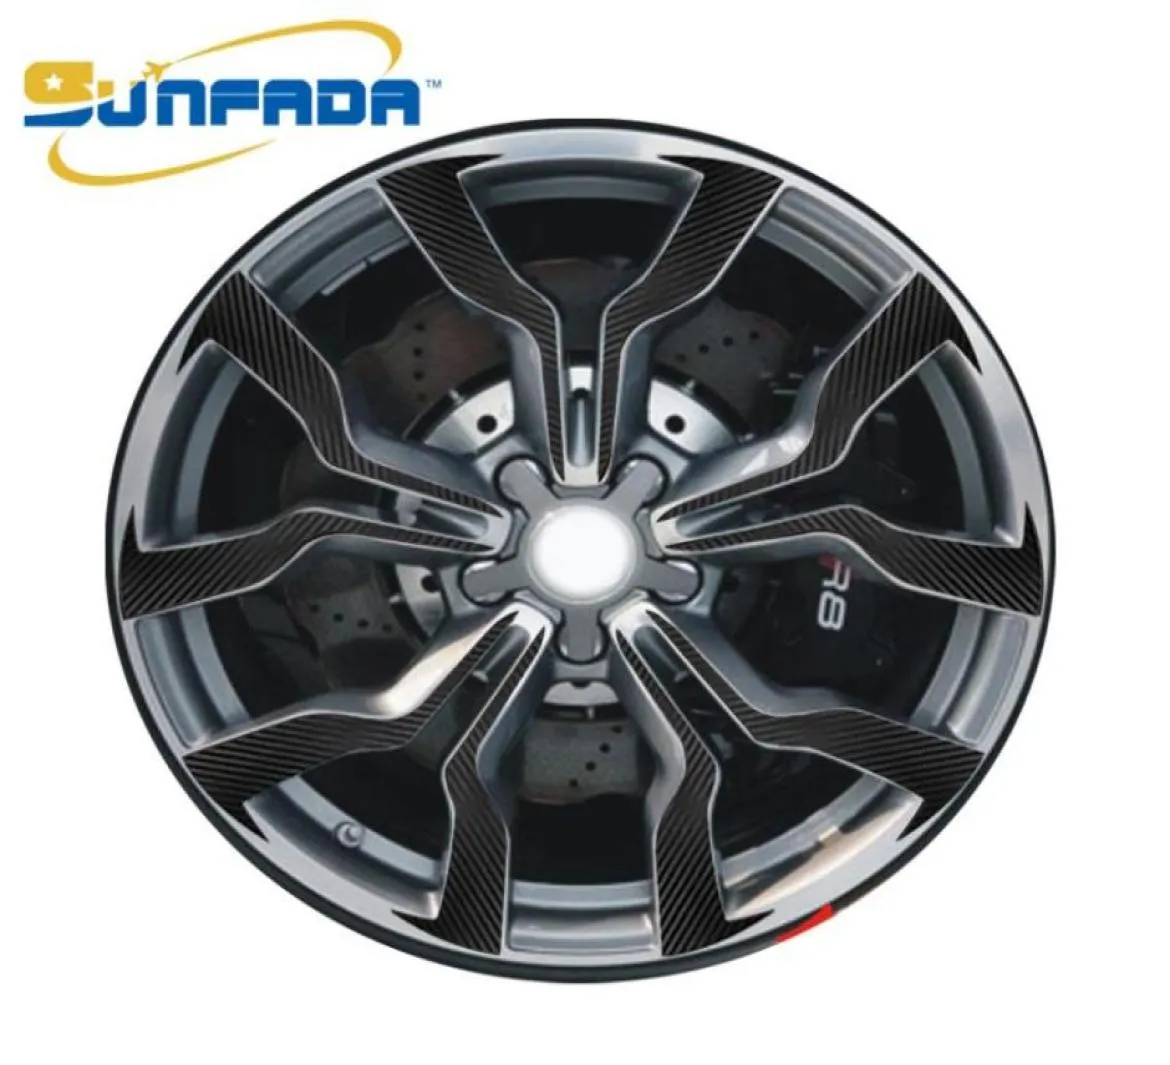 Adesivo de fibra de carbono para roda preta, adesivo de carro para r8, decalque externo, estilo de carro, 18 polegadas, 19 polegadas, wheel46956756521914